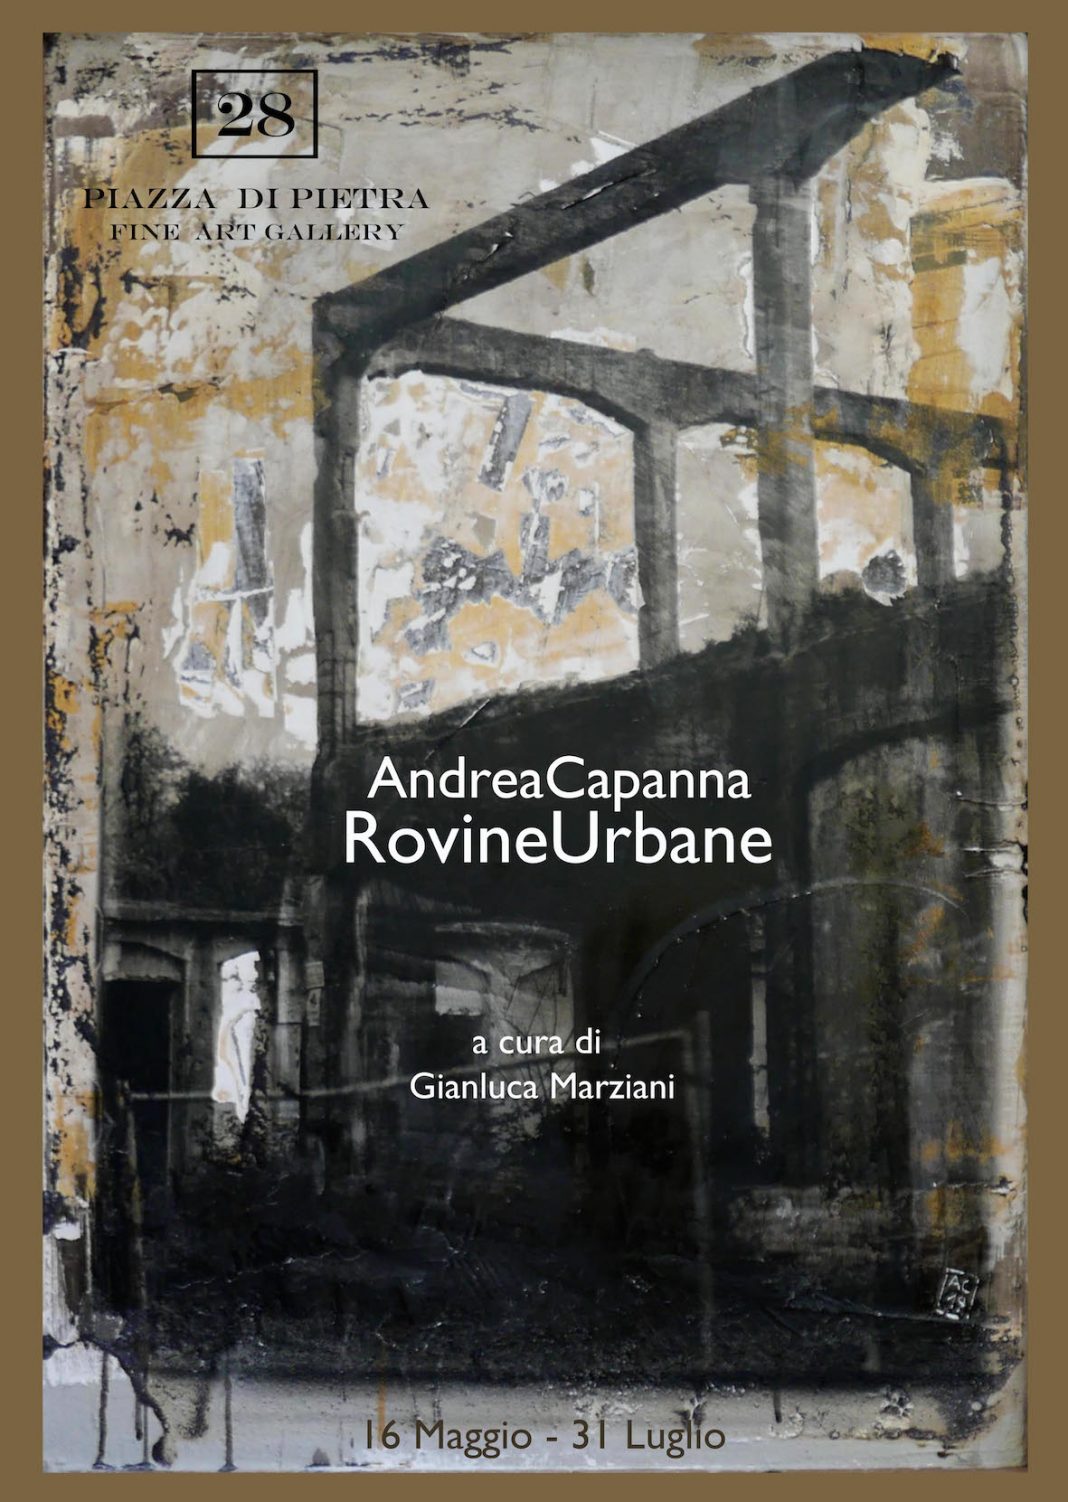 Andrea Capanna – Rovine Urbanehttps://www.exibart.com/repository/media/eventi/2019/05/andrea-capanna-8211-rovine-urbane-1068x1502.jpg